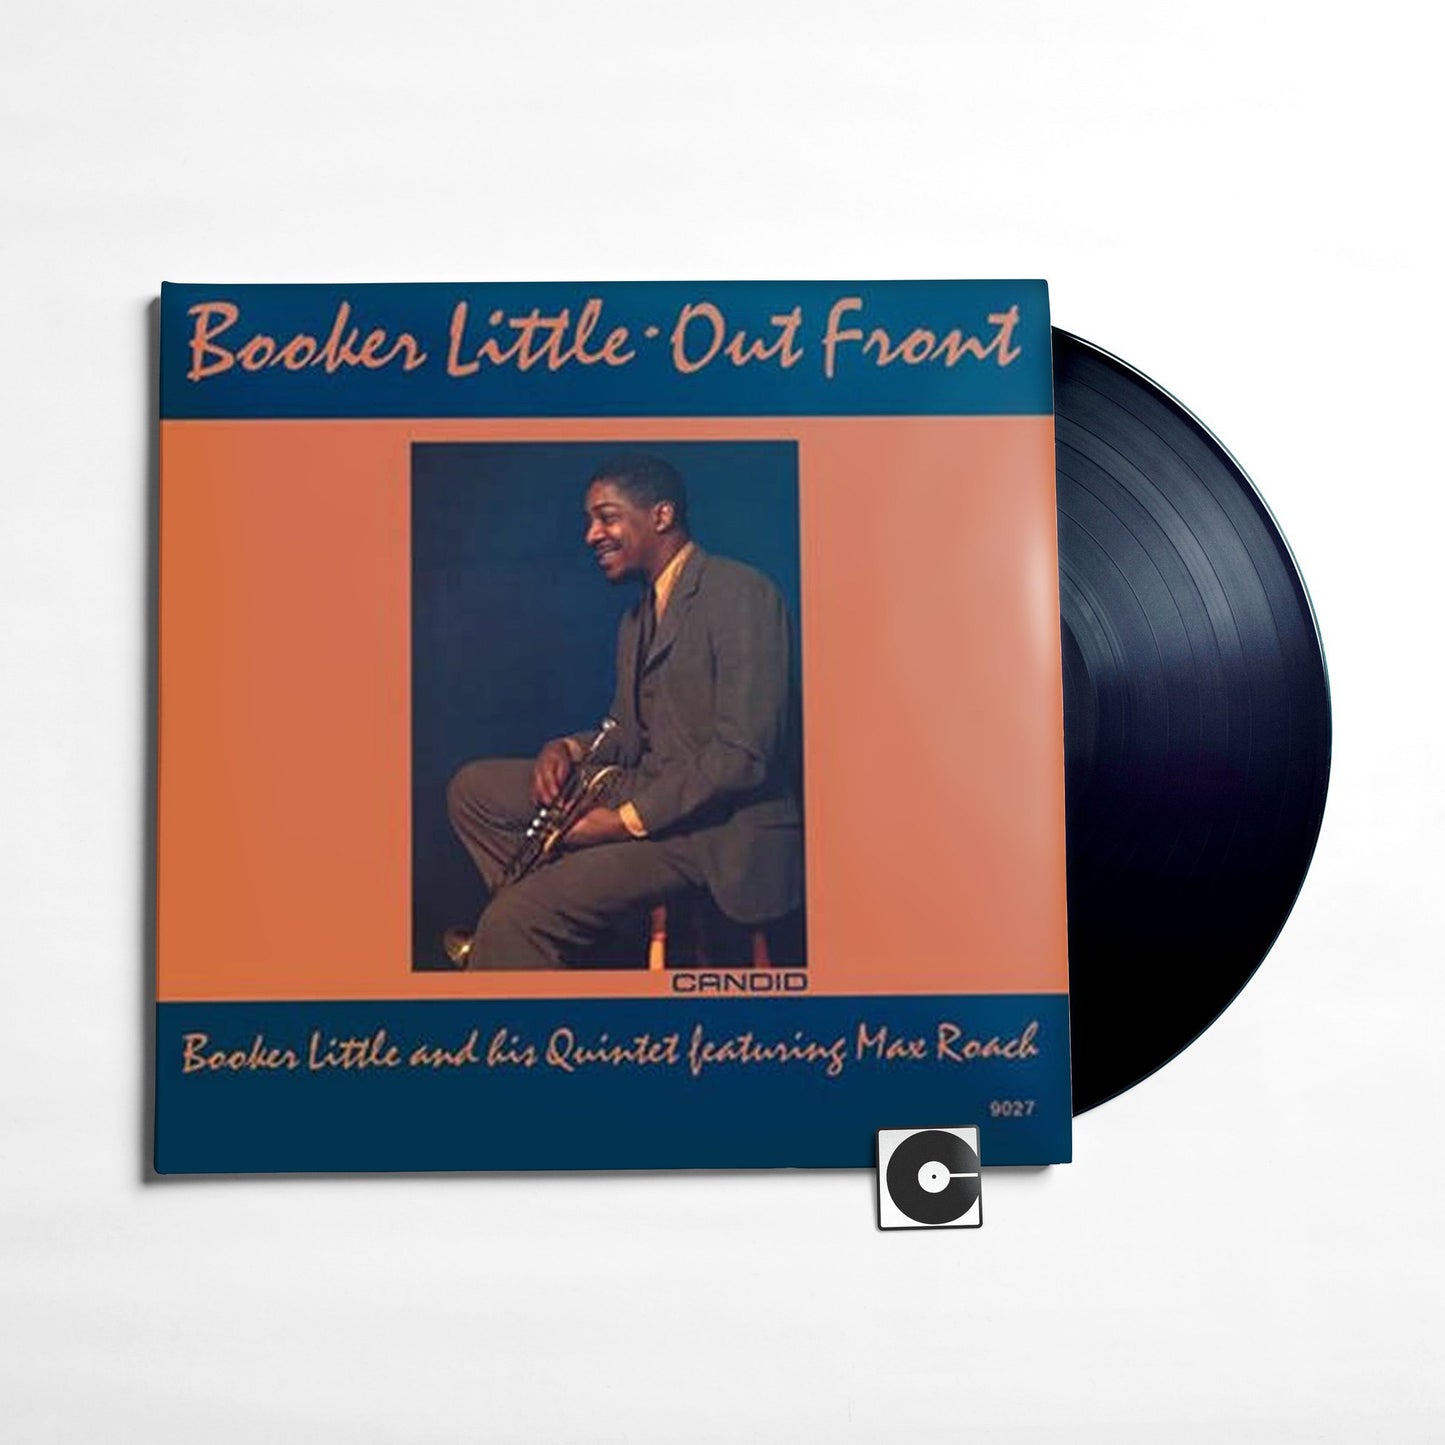 Booker Little - "Out Front" Pure Pleasure